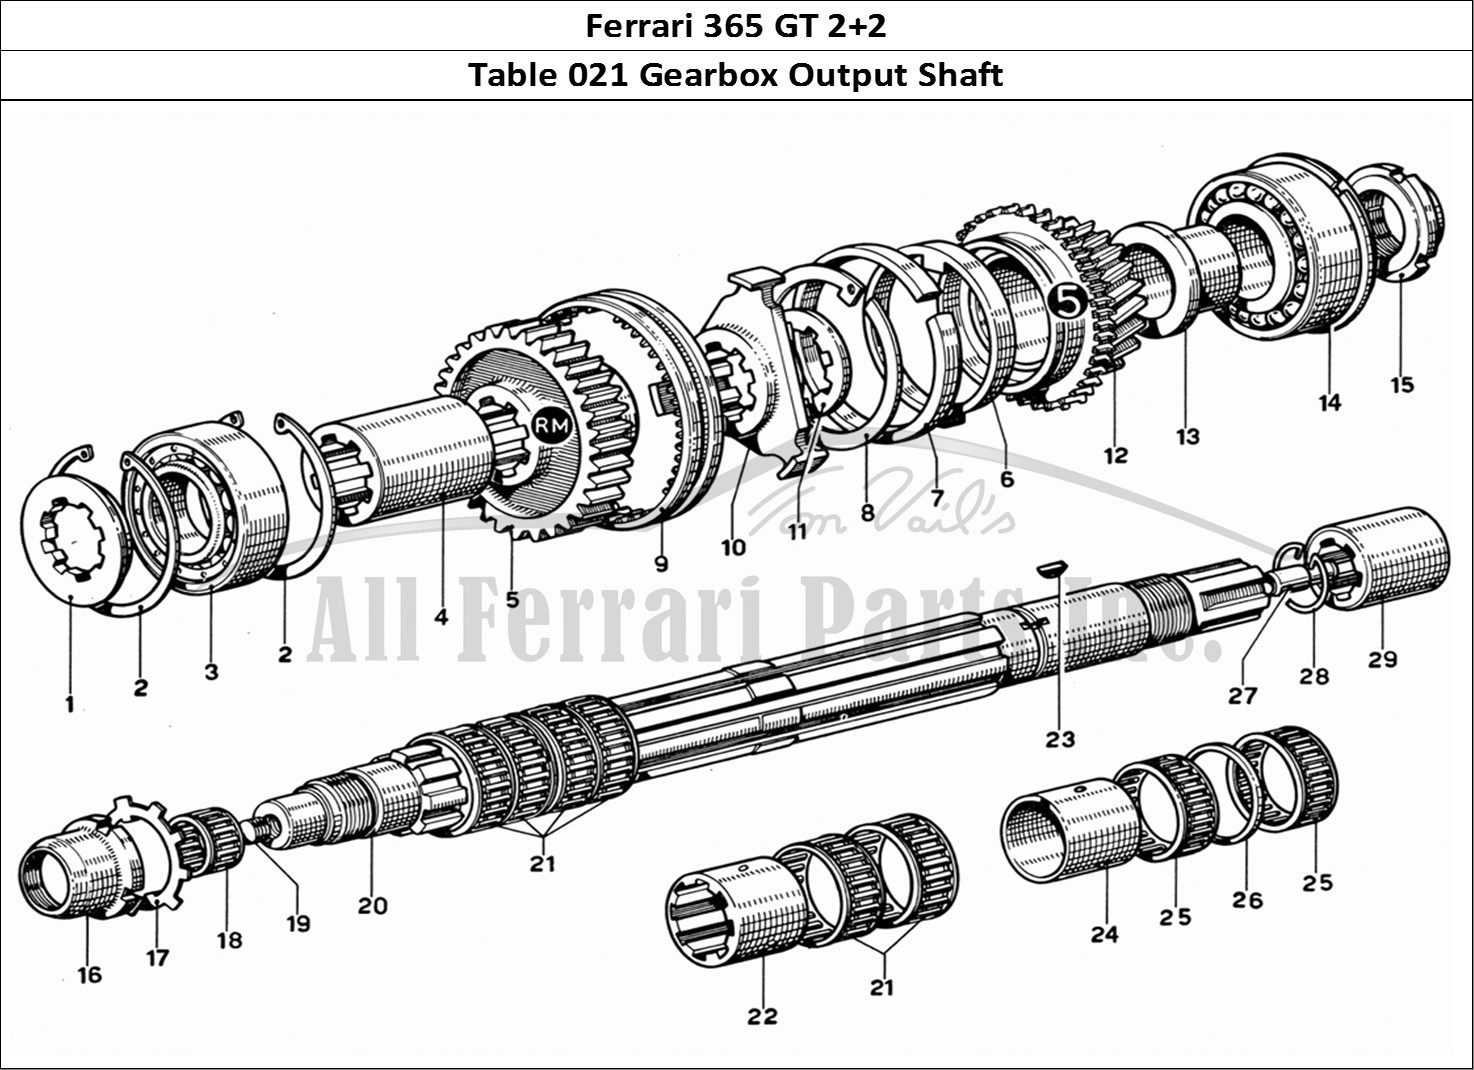 Ferrari Parts Ferrari 365 GT 2+2 (Mechanical) Page 021 Output Shaft